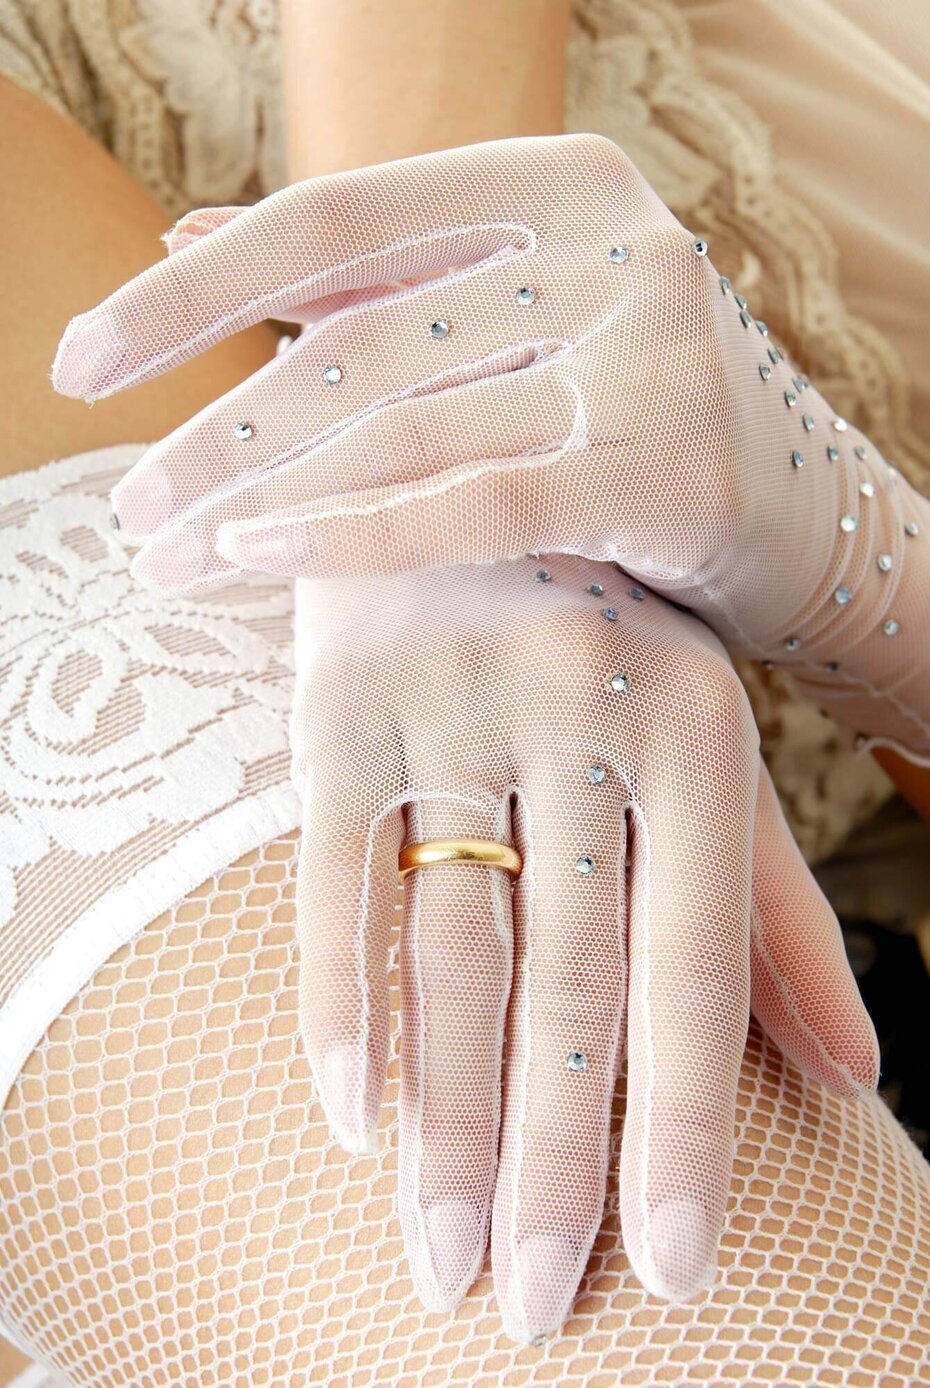 Brauthandschuhe